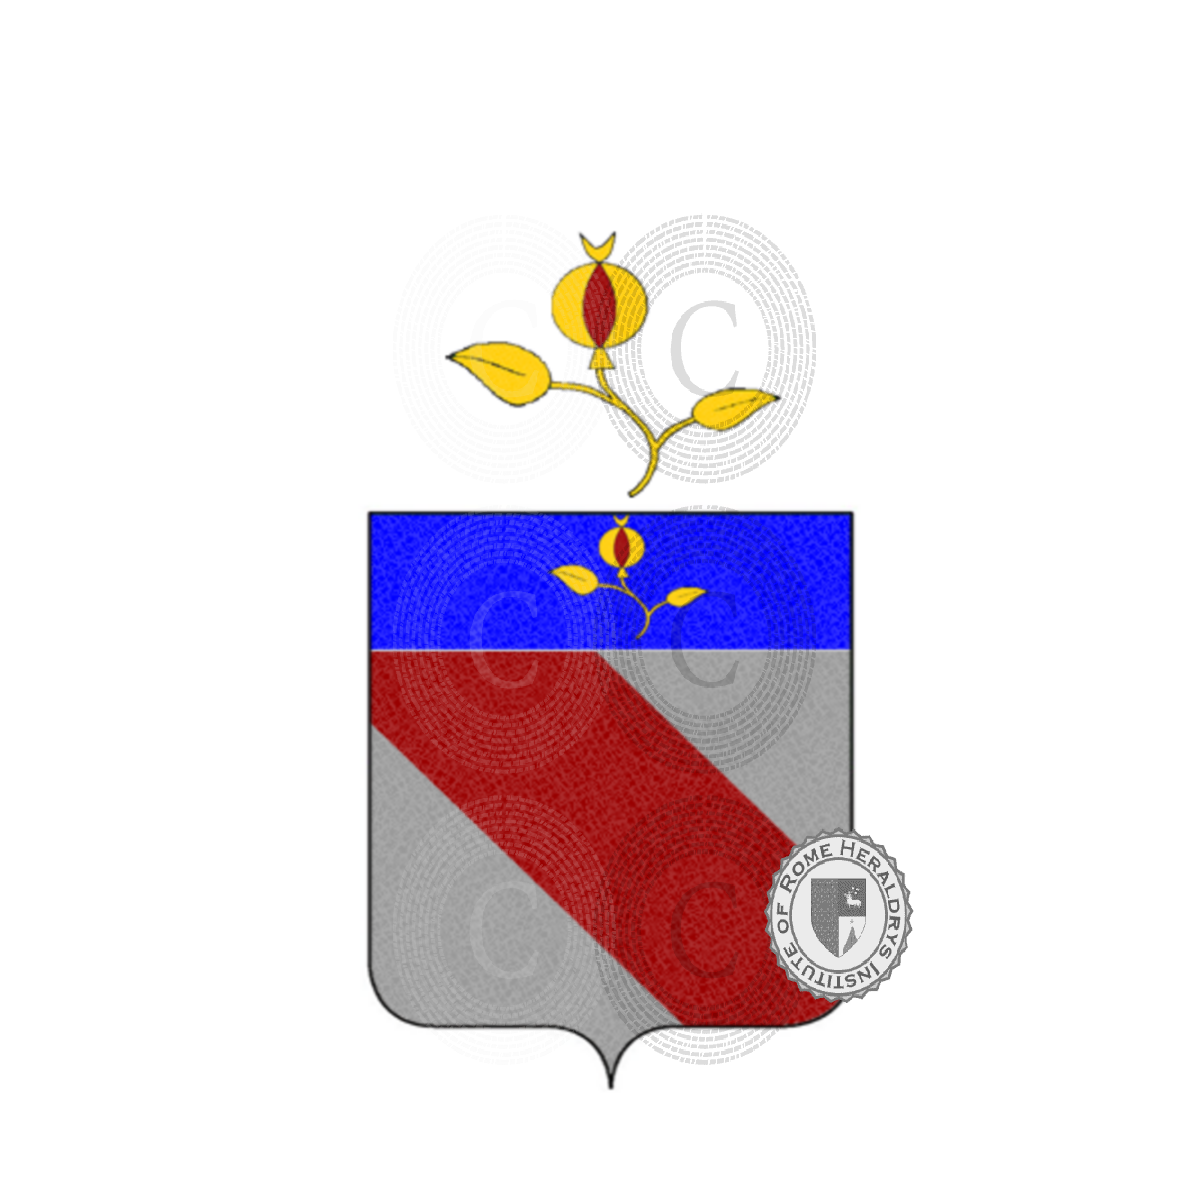 Wappen der Familievercellino        